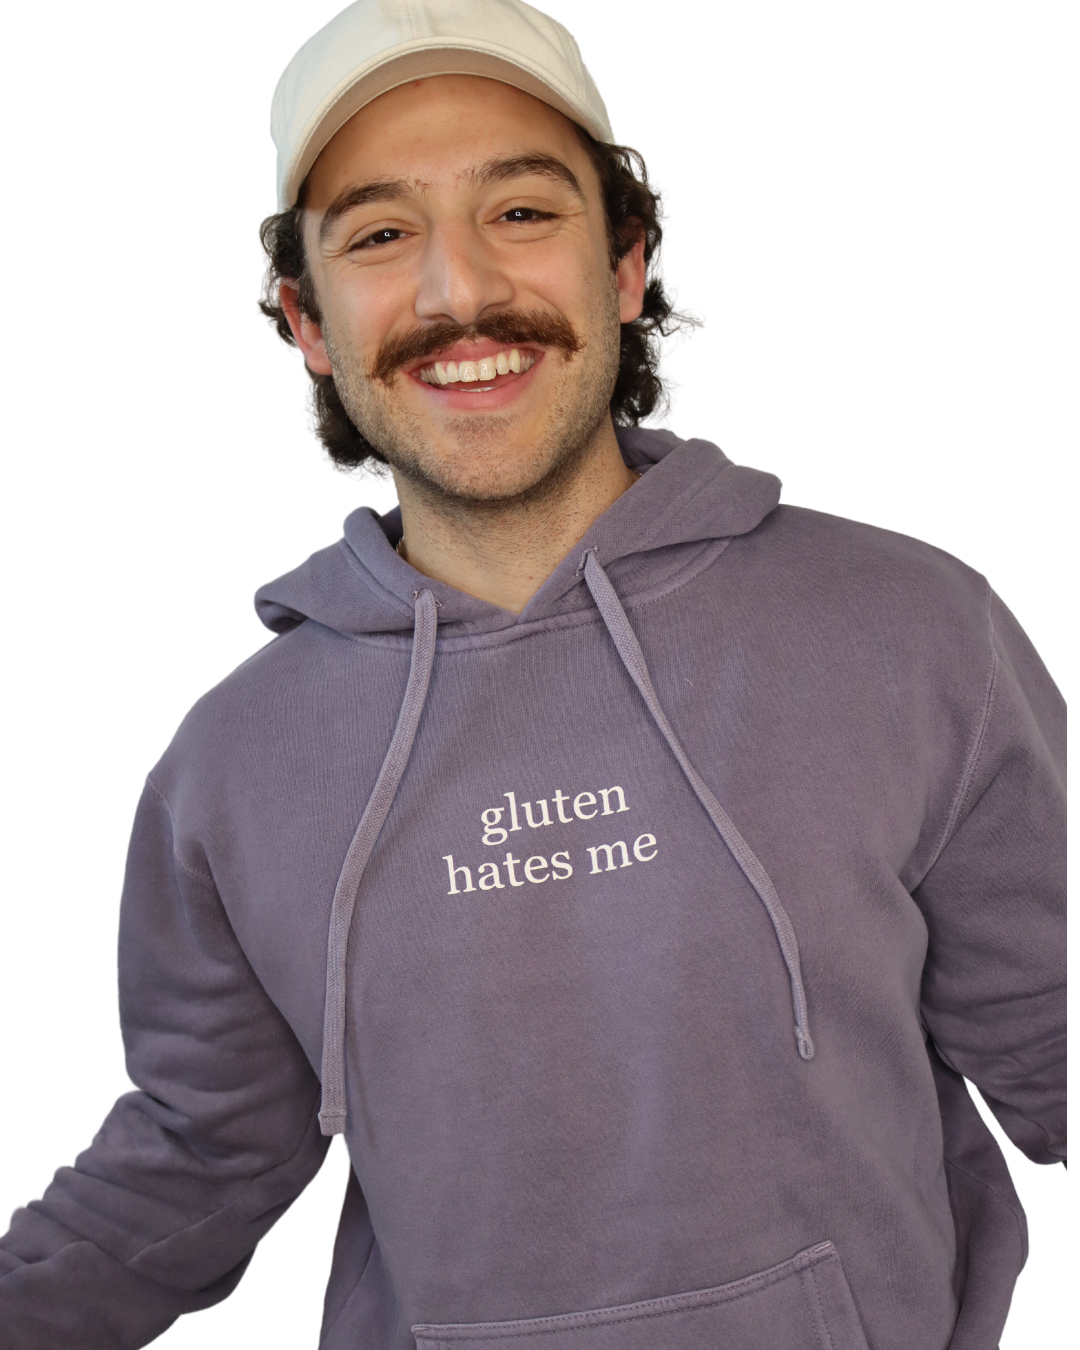 "gluten hates me" Hoodie (Pigment Plum) LIMITED SUPPLY